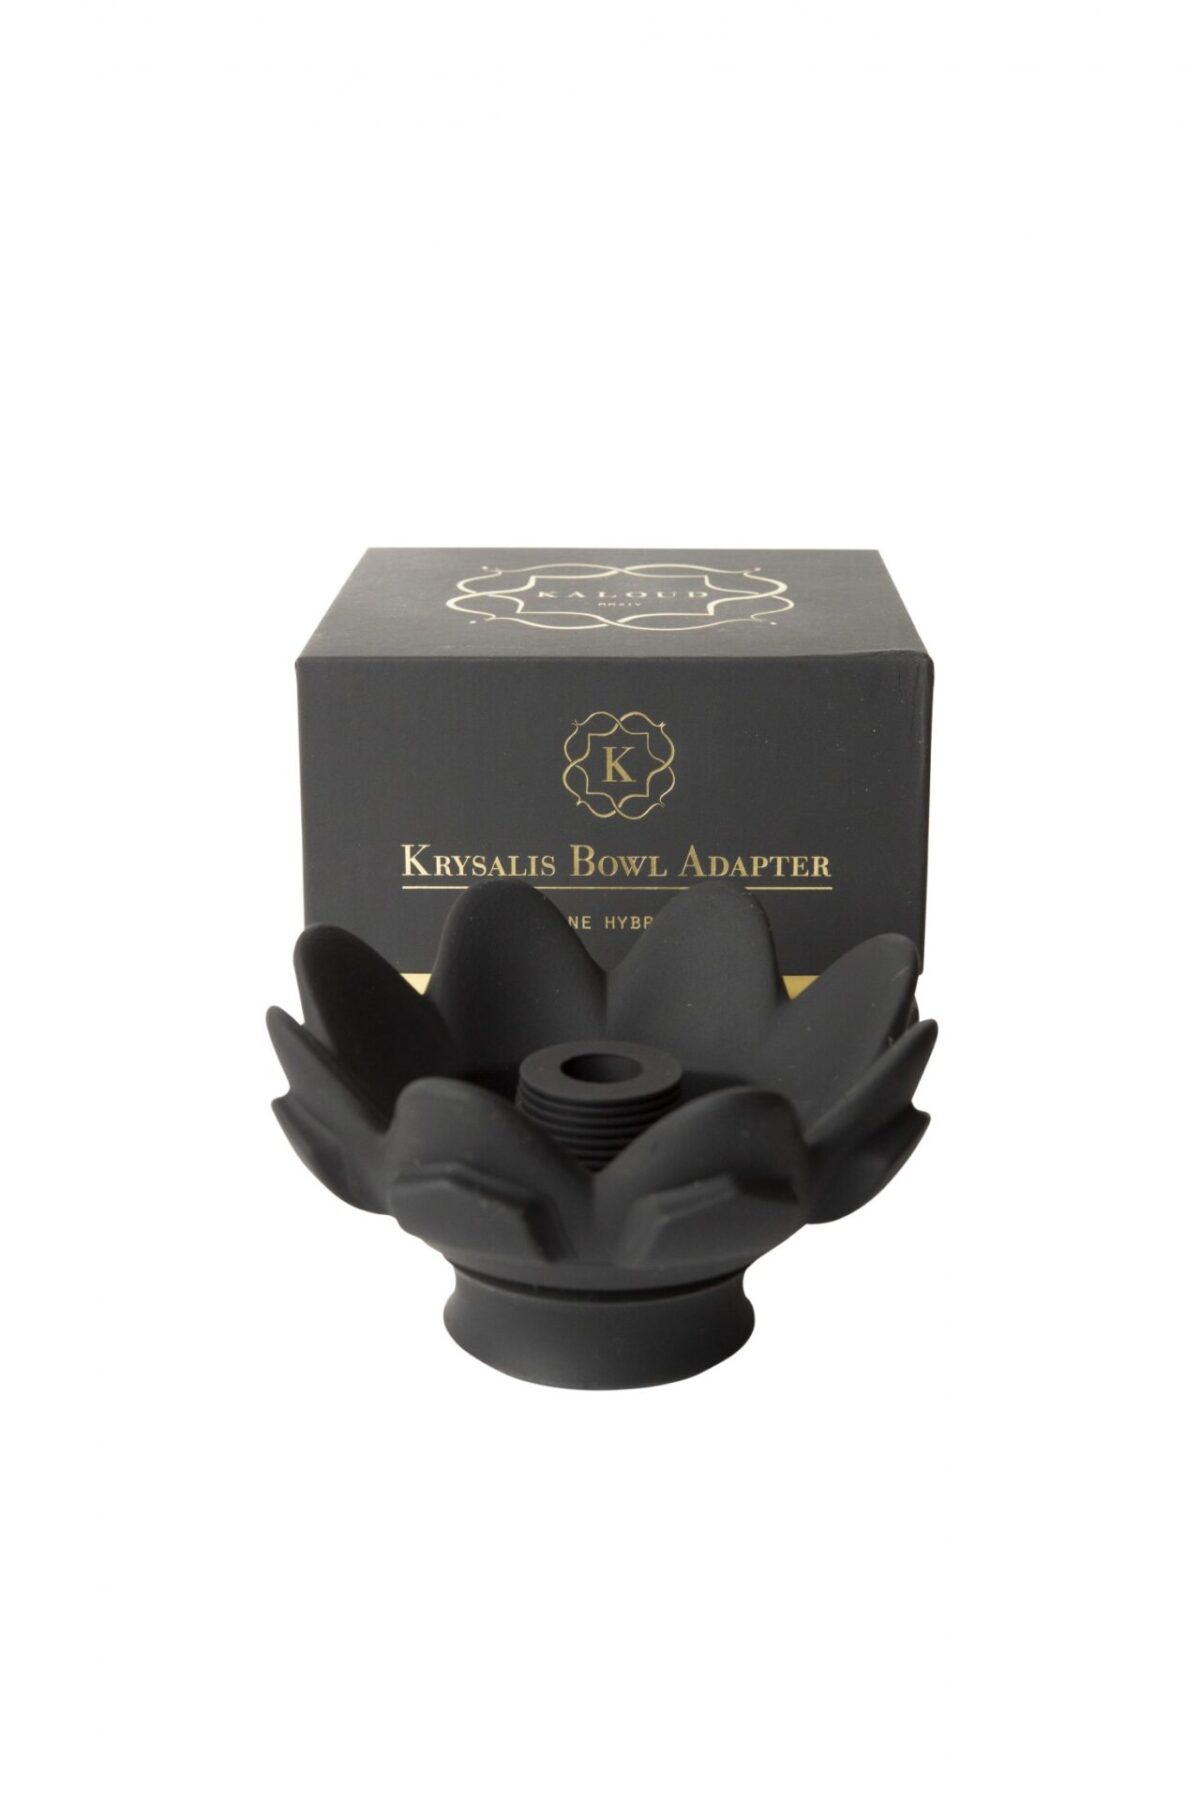 Kaloud Krysalis Foreign Bowl Adapter